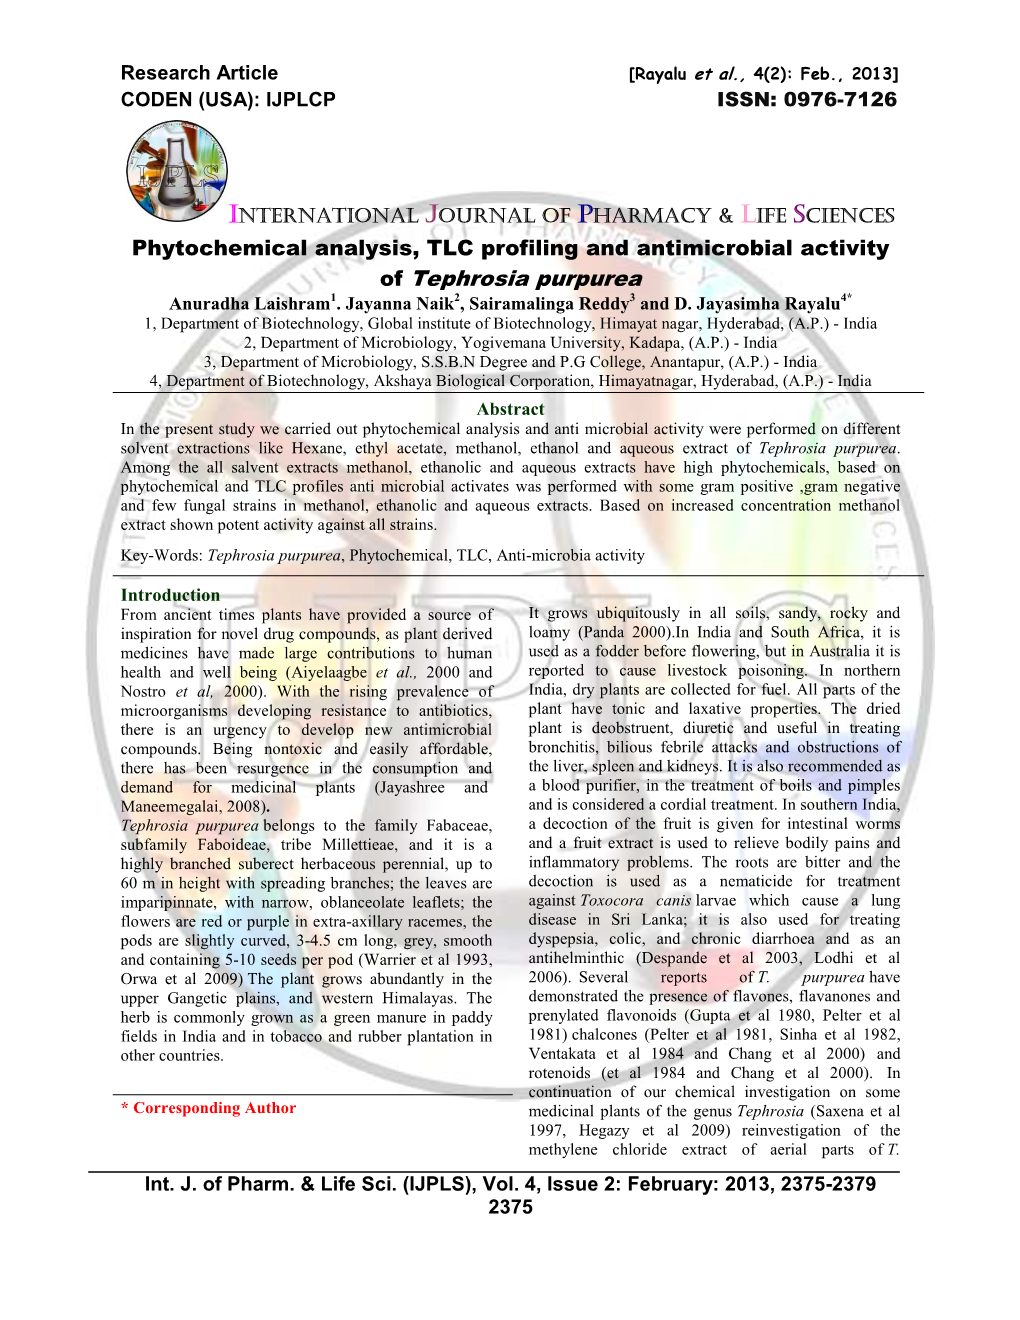 Phytochemical Analysis, TLC Profiling and Antimicrobial Activity of Tephrosia Purpurea Anuradha Laishram 1